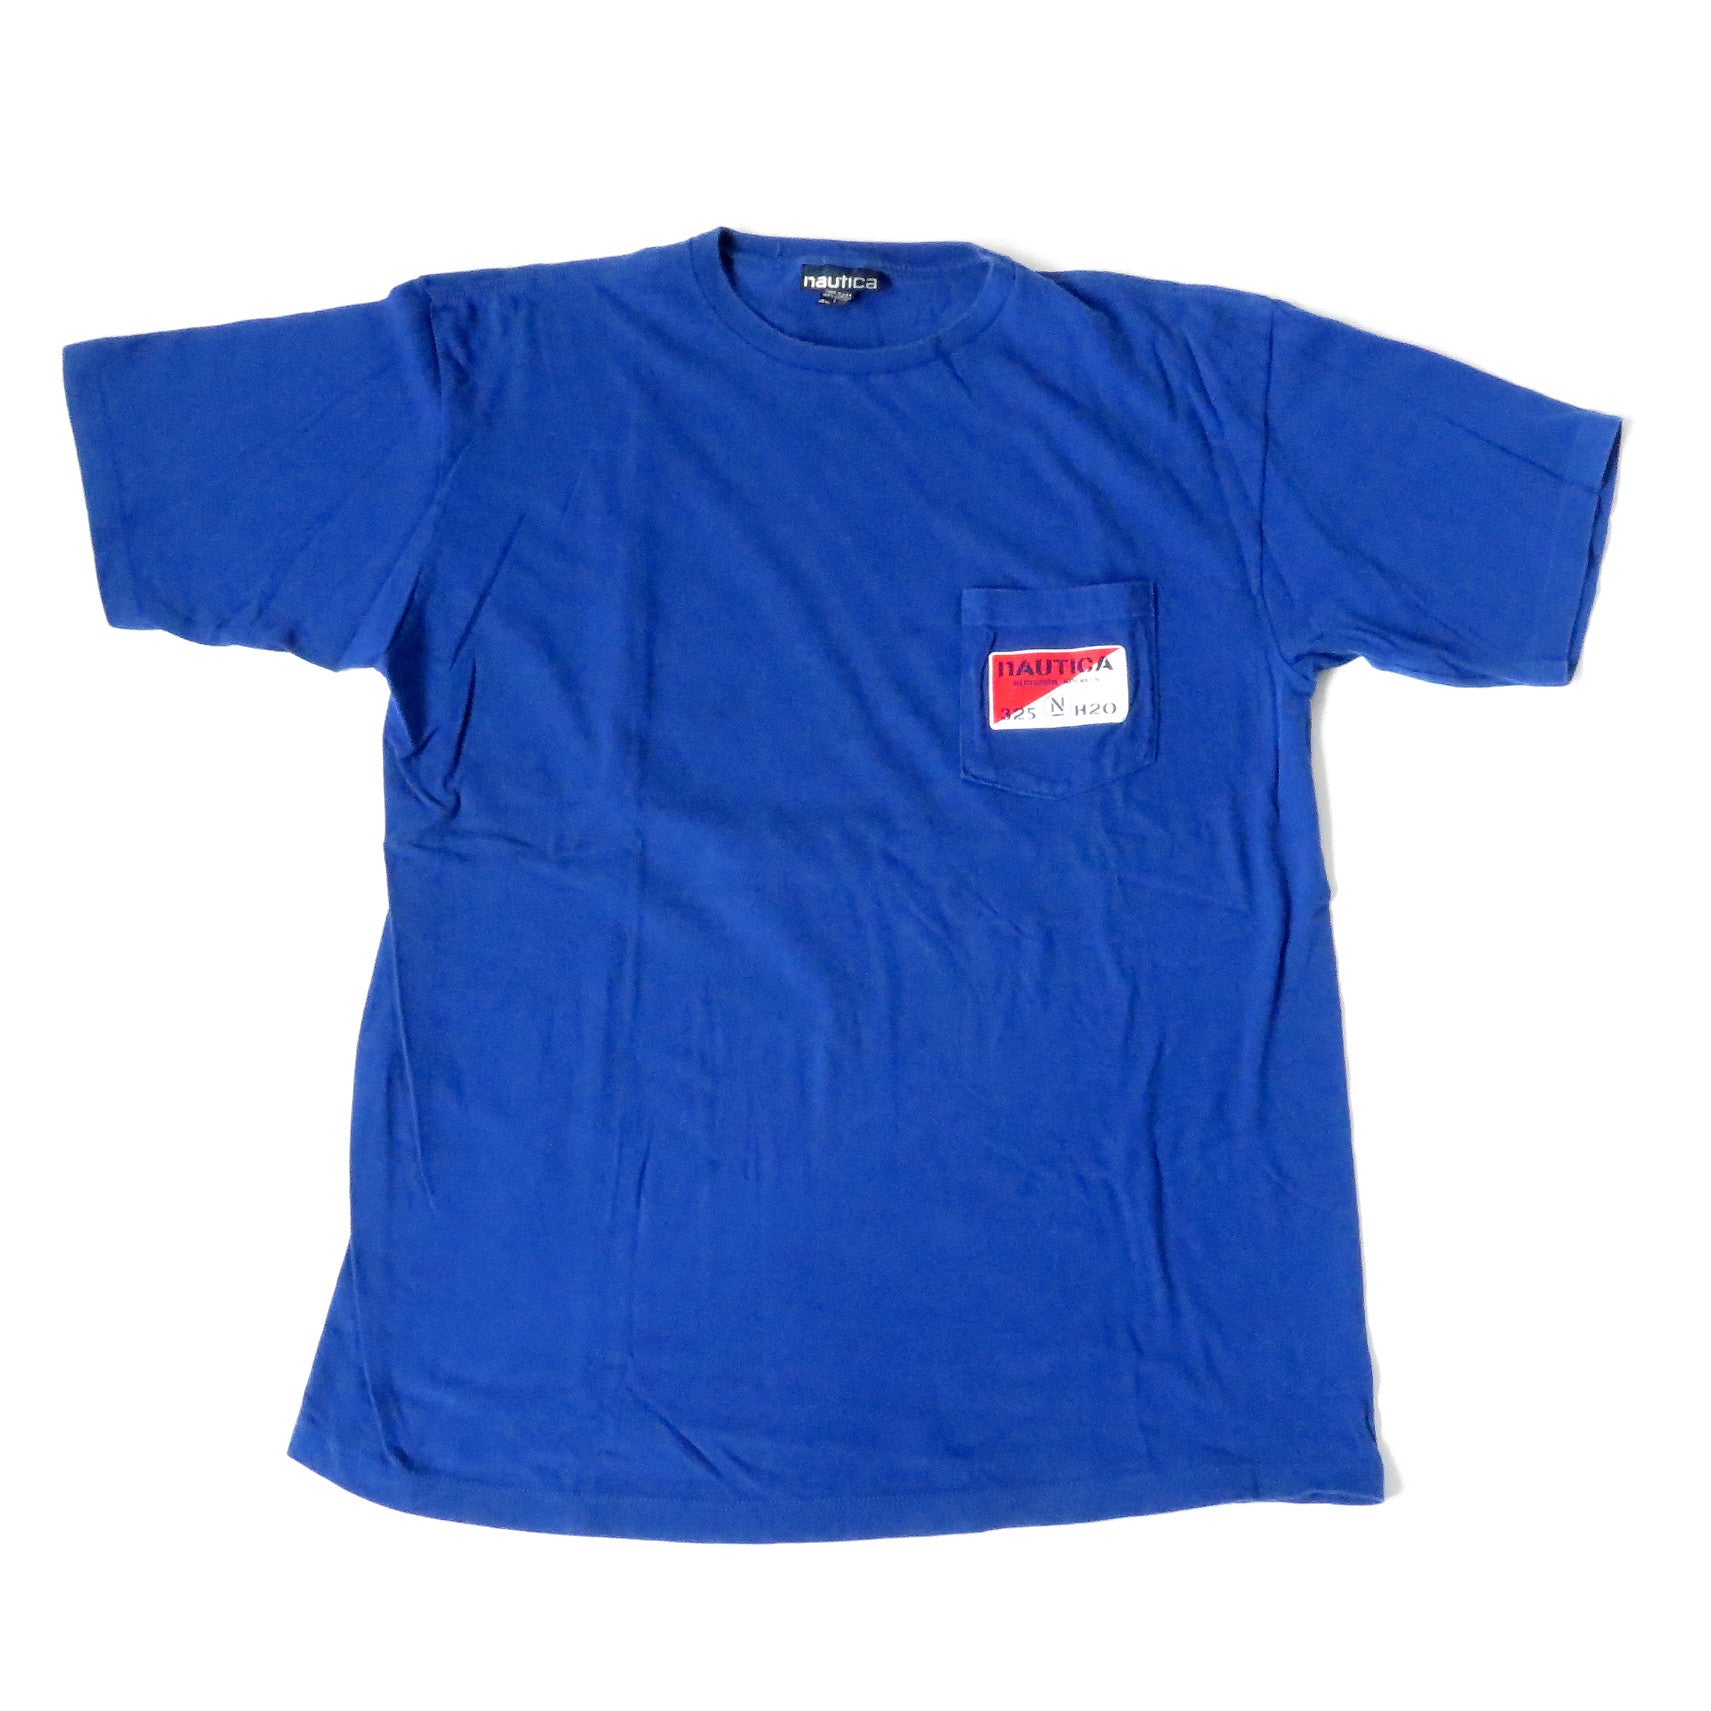 Vintage Nautica Summer Sports Pocket T-Shirt Sz L